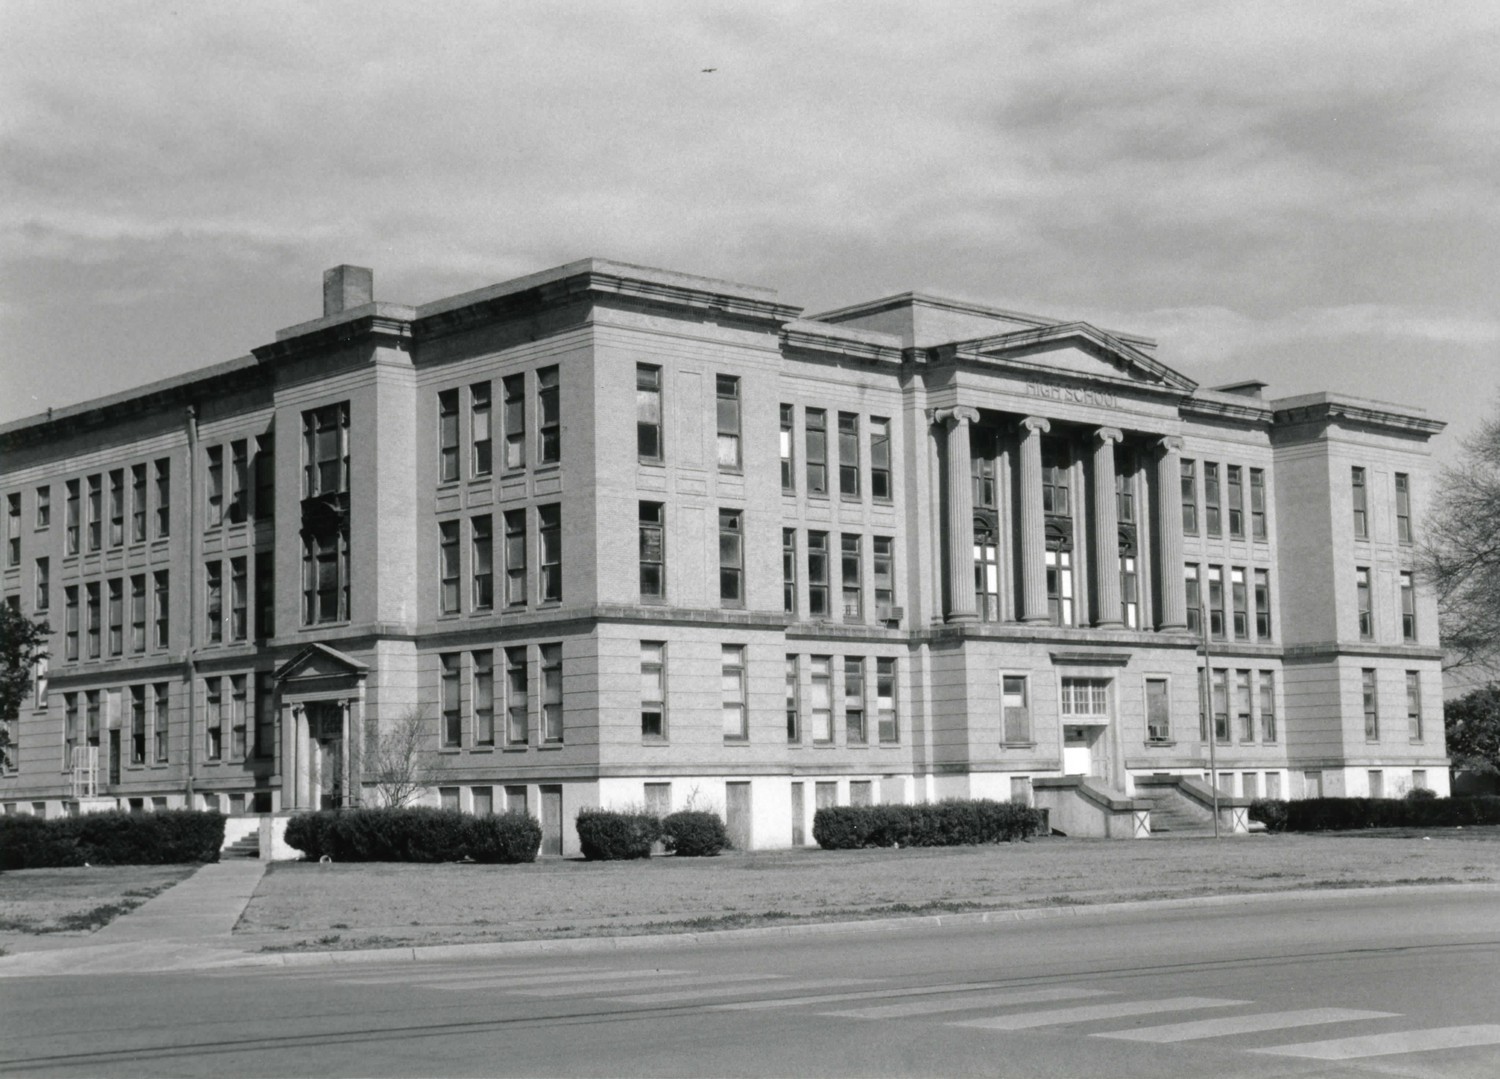 Waco High School, Waco Texas Columbus Ave. and North 9th Street facades Camera facing north (2008)